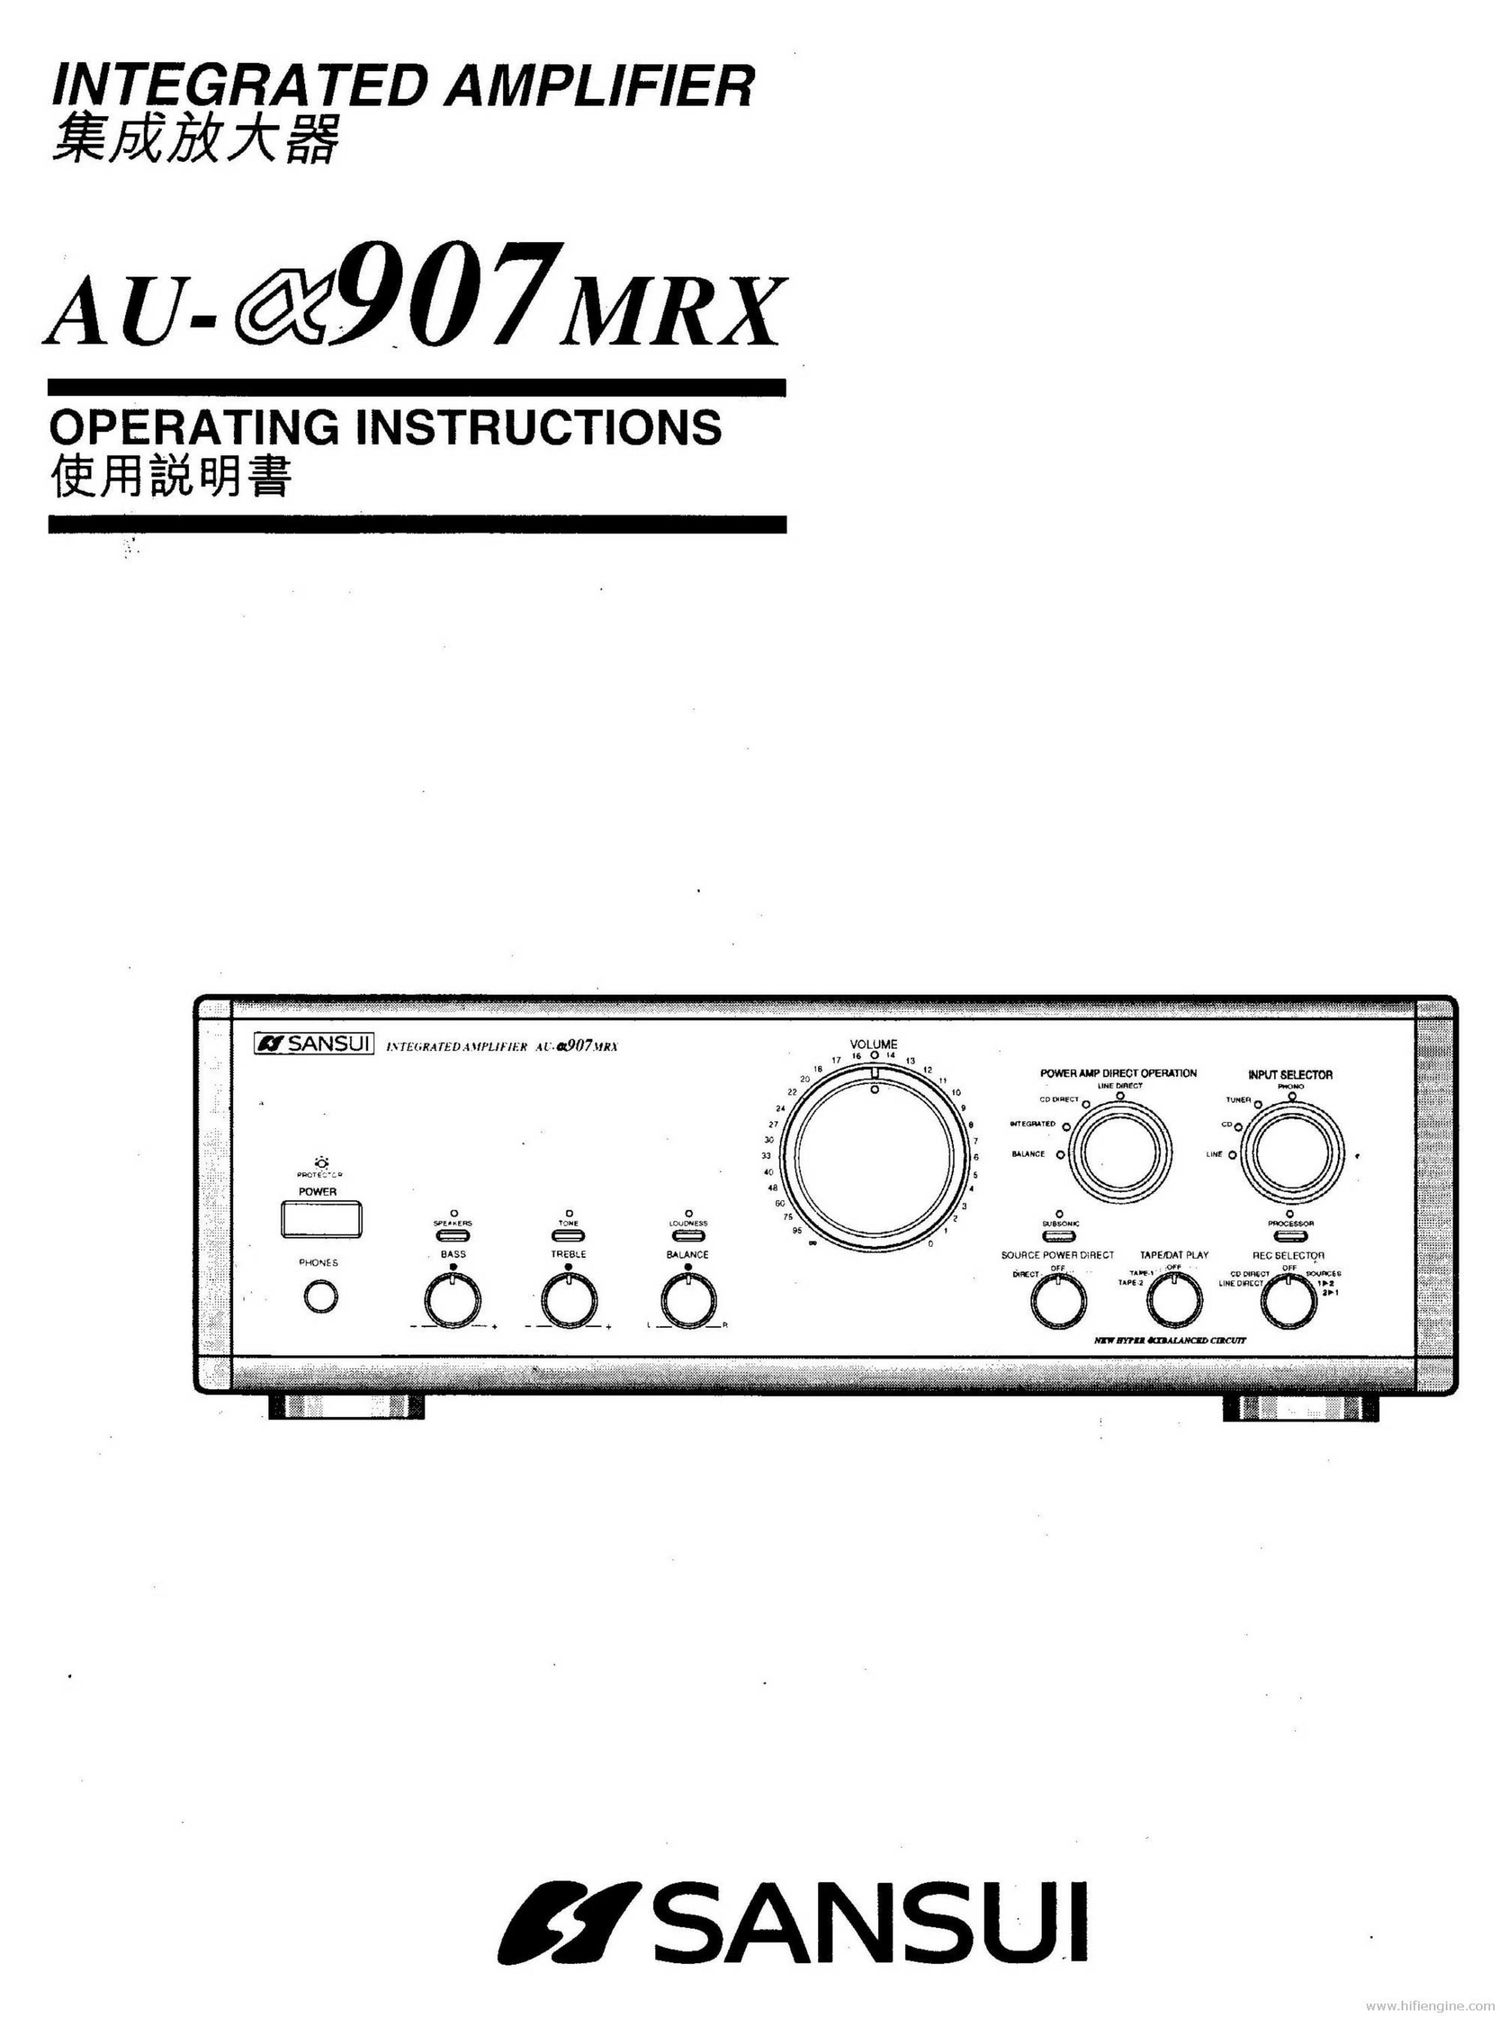 Sansui AUa 907 MRX Owners Manual